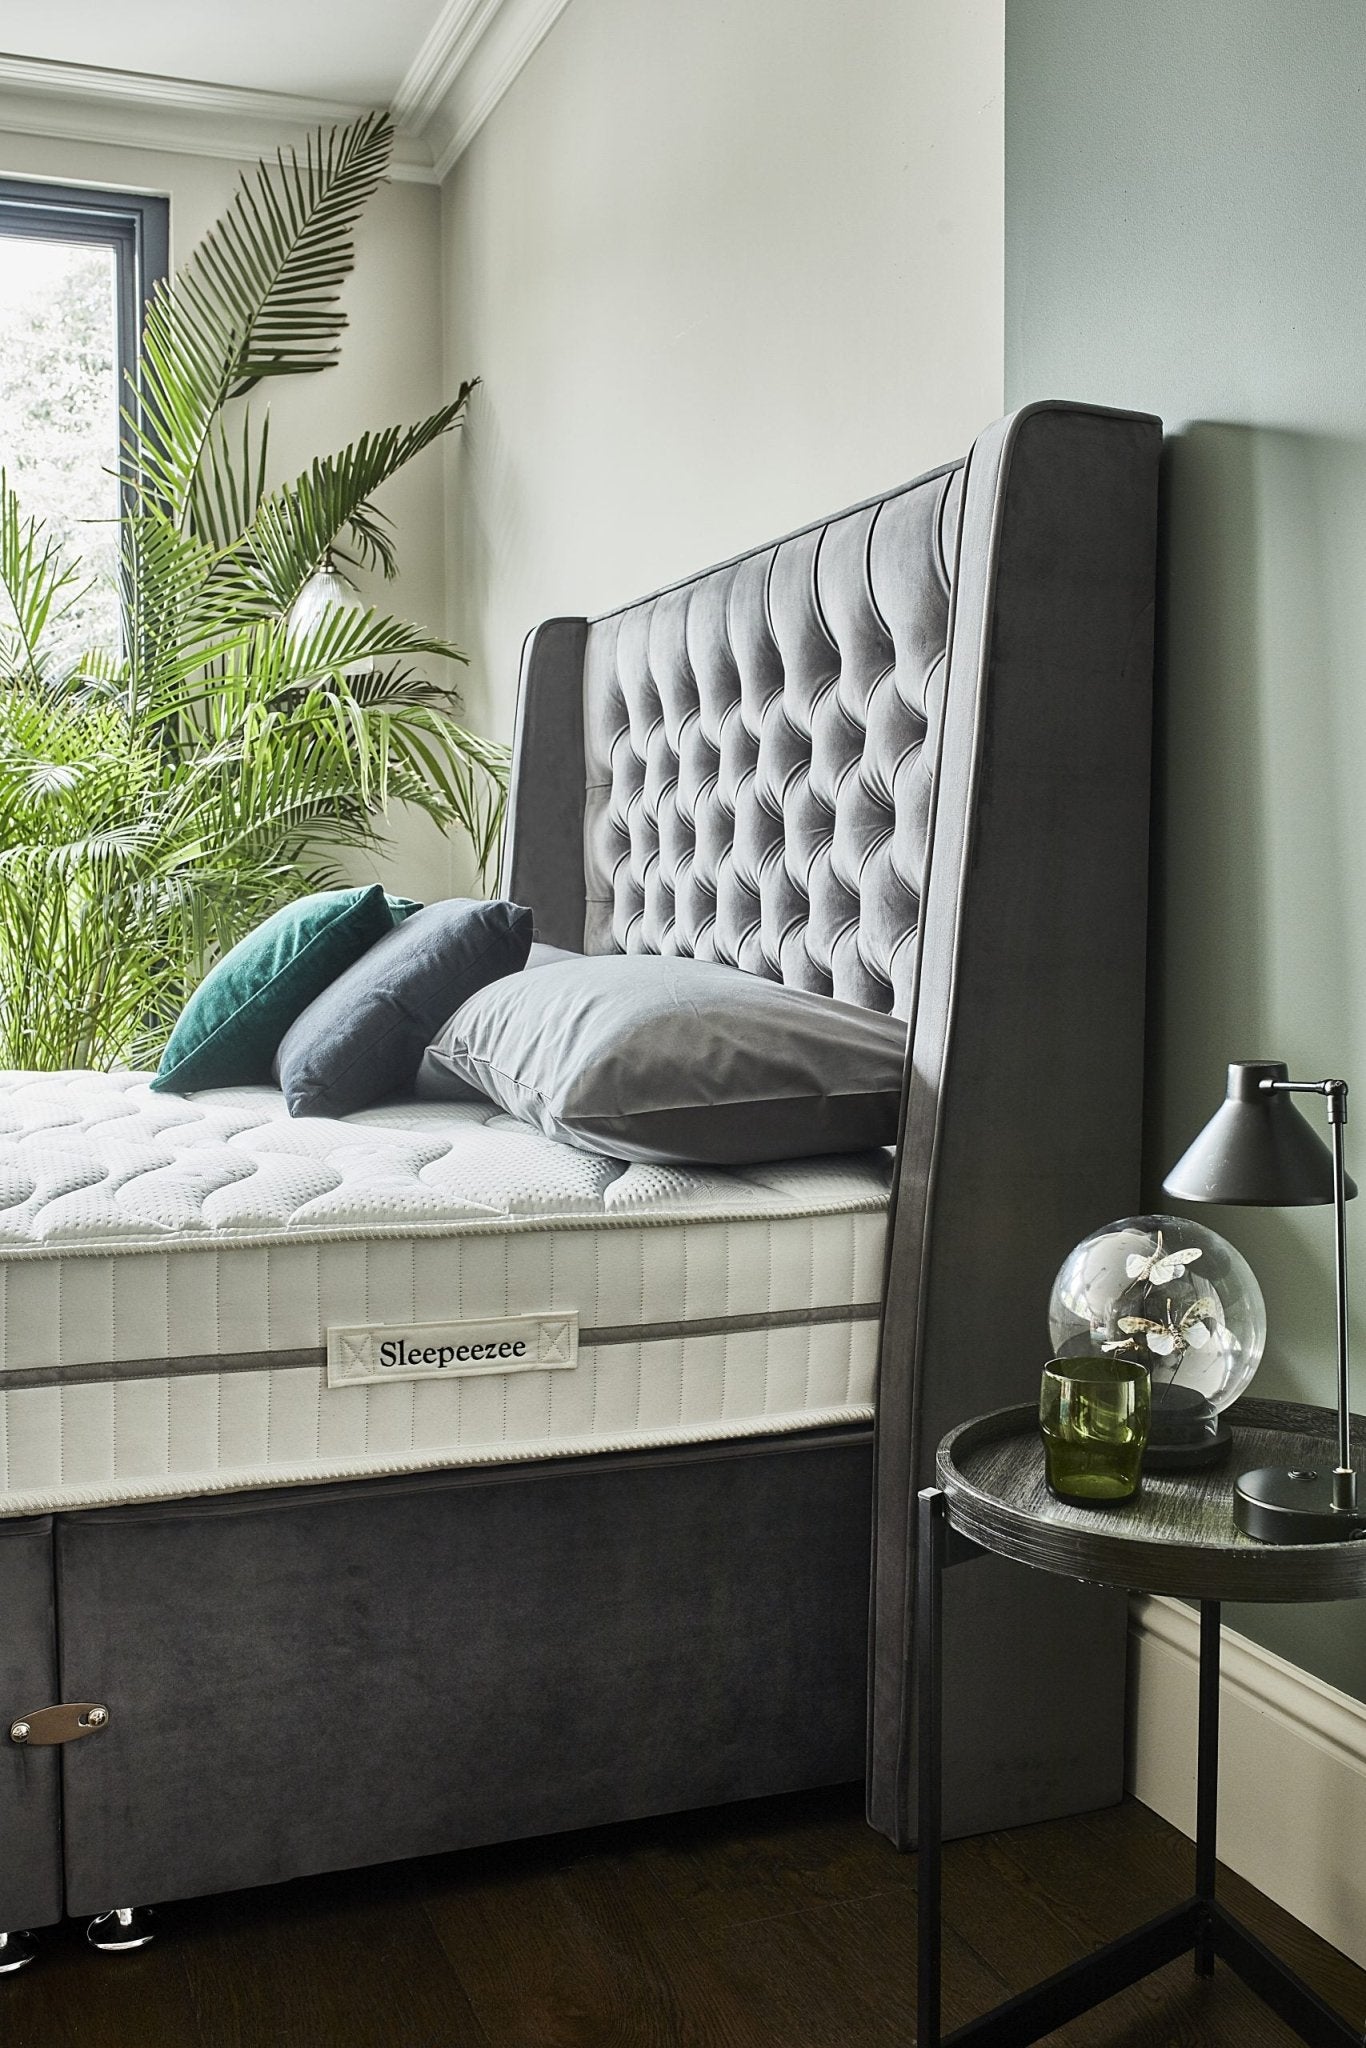 Sleepeezee G3 Mattress - G Memory collection - TV Beds Northwest - double - king mattress